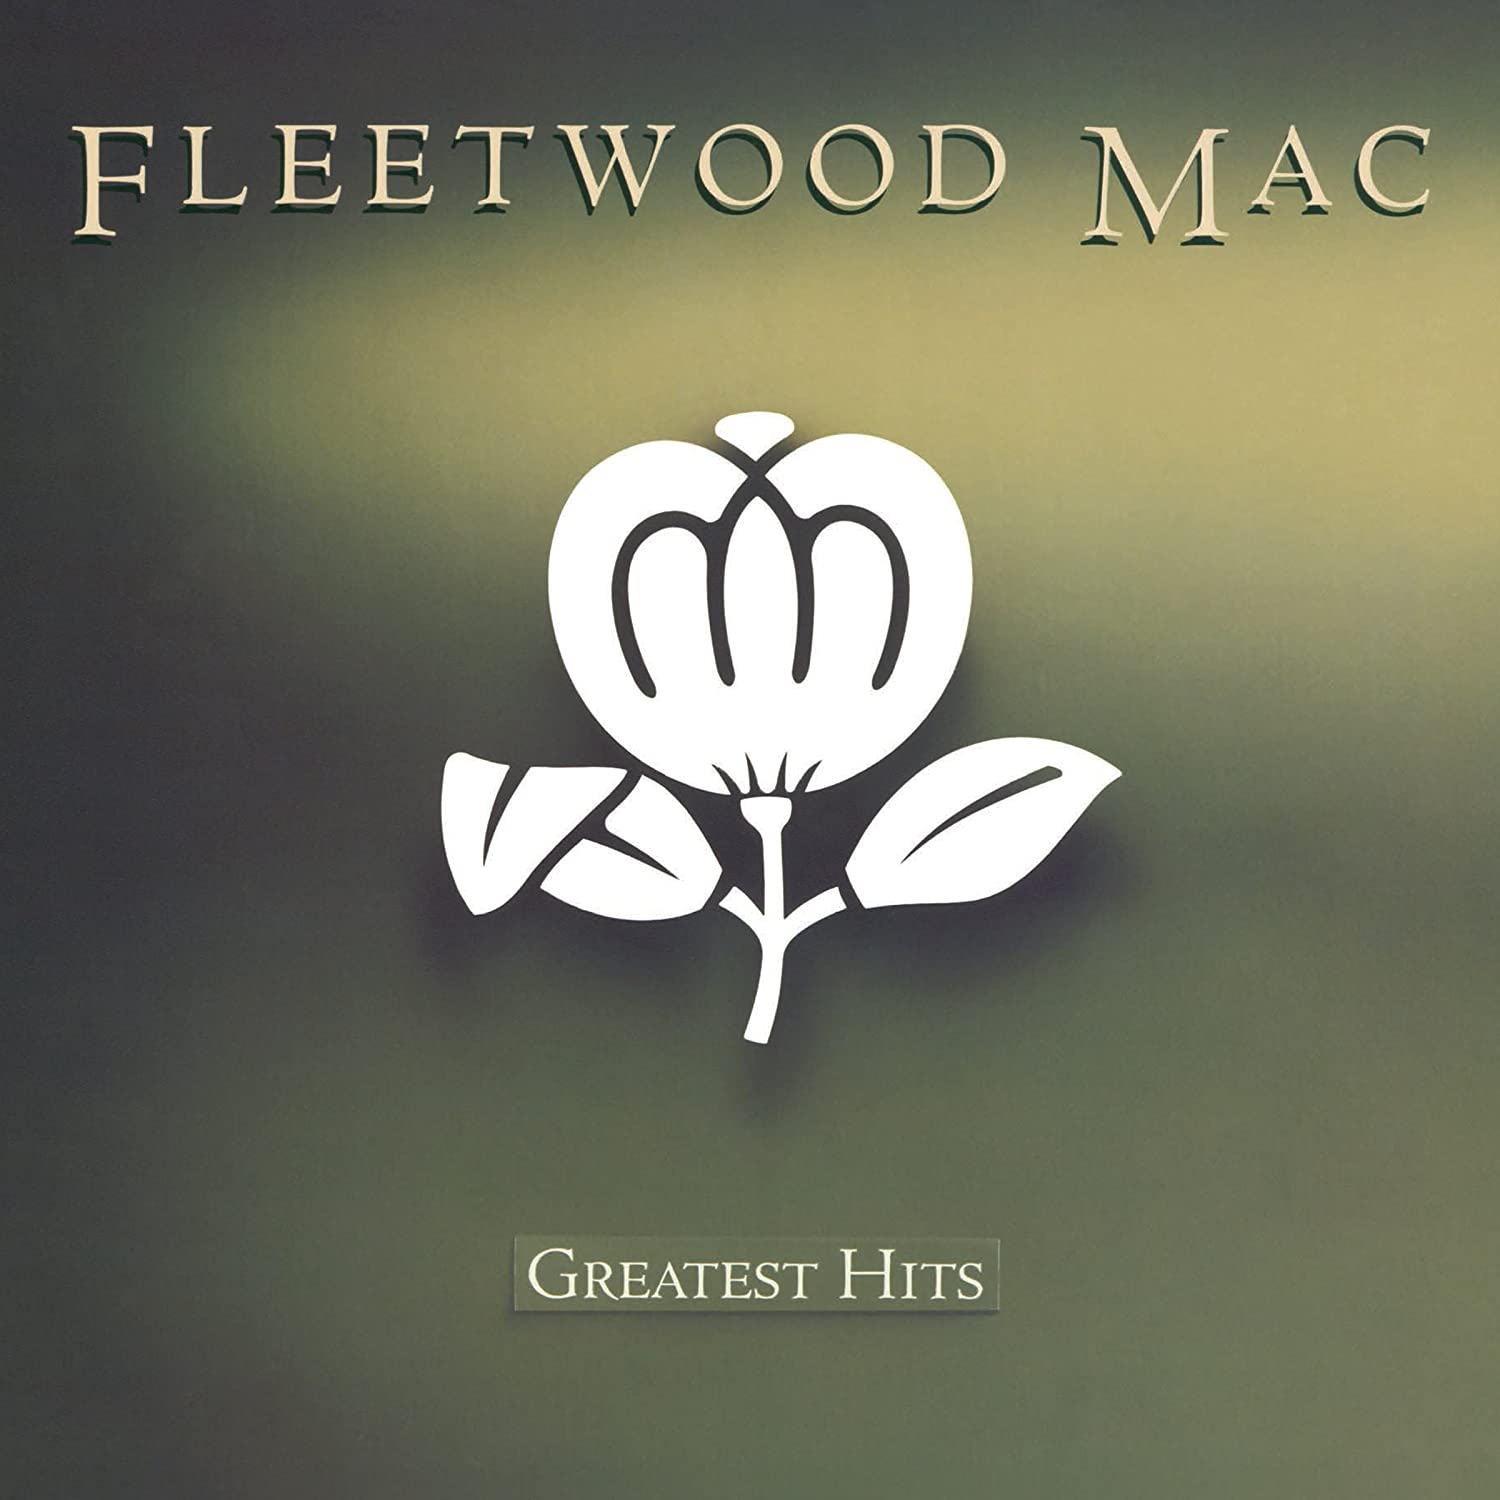 FLEETWOOD MAC - GREATEST HITS Vinyl LP